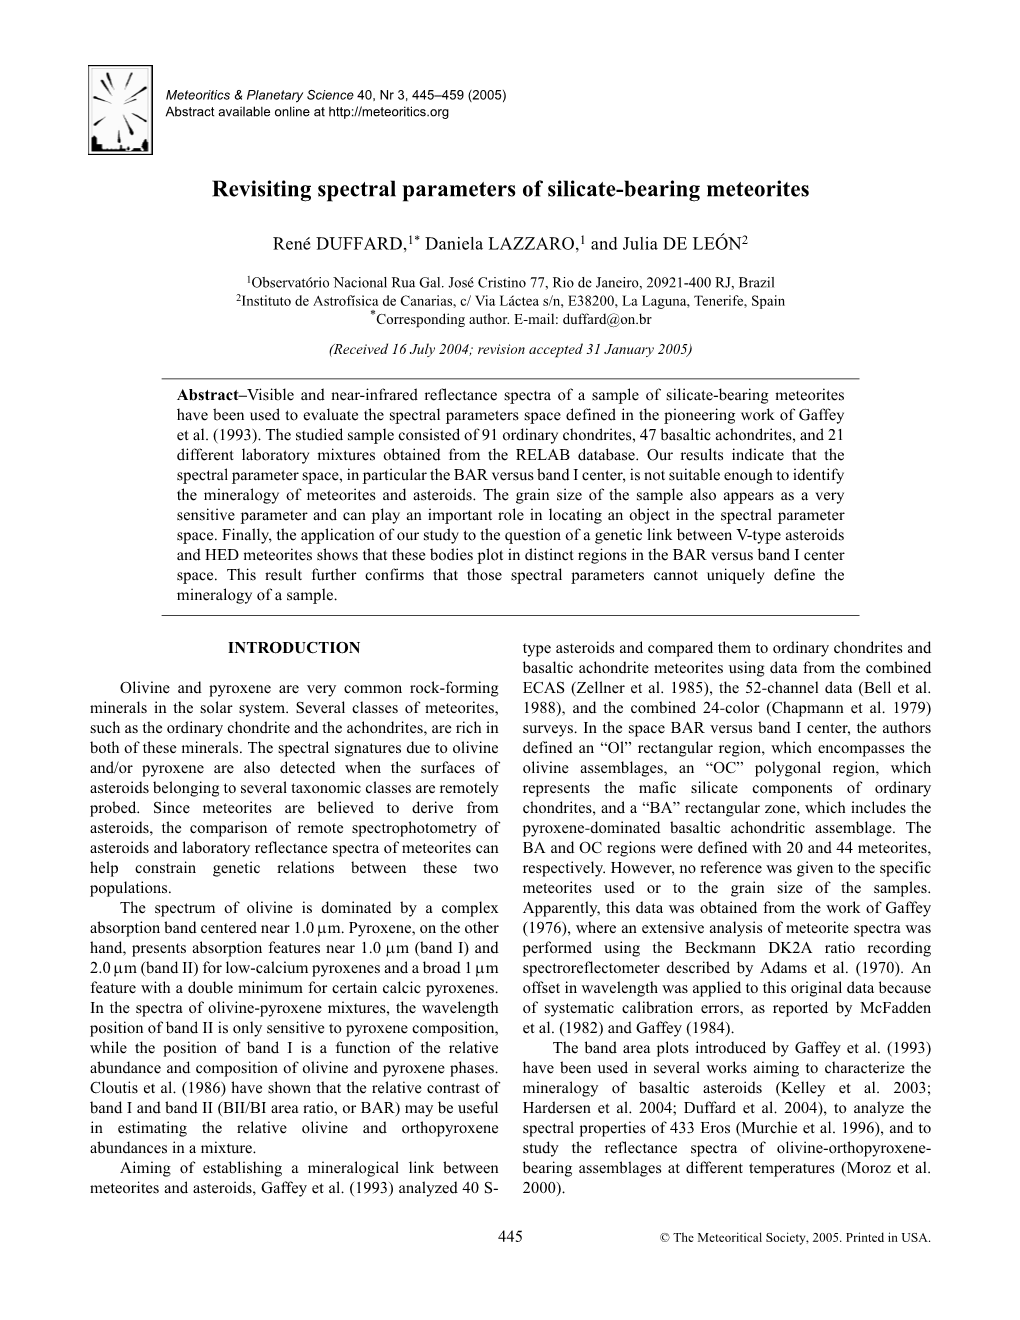 Revisiting Spectral Parameters of Silicate-Bearing Meteorites